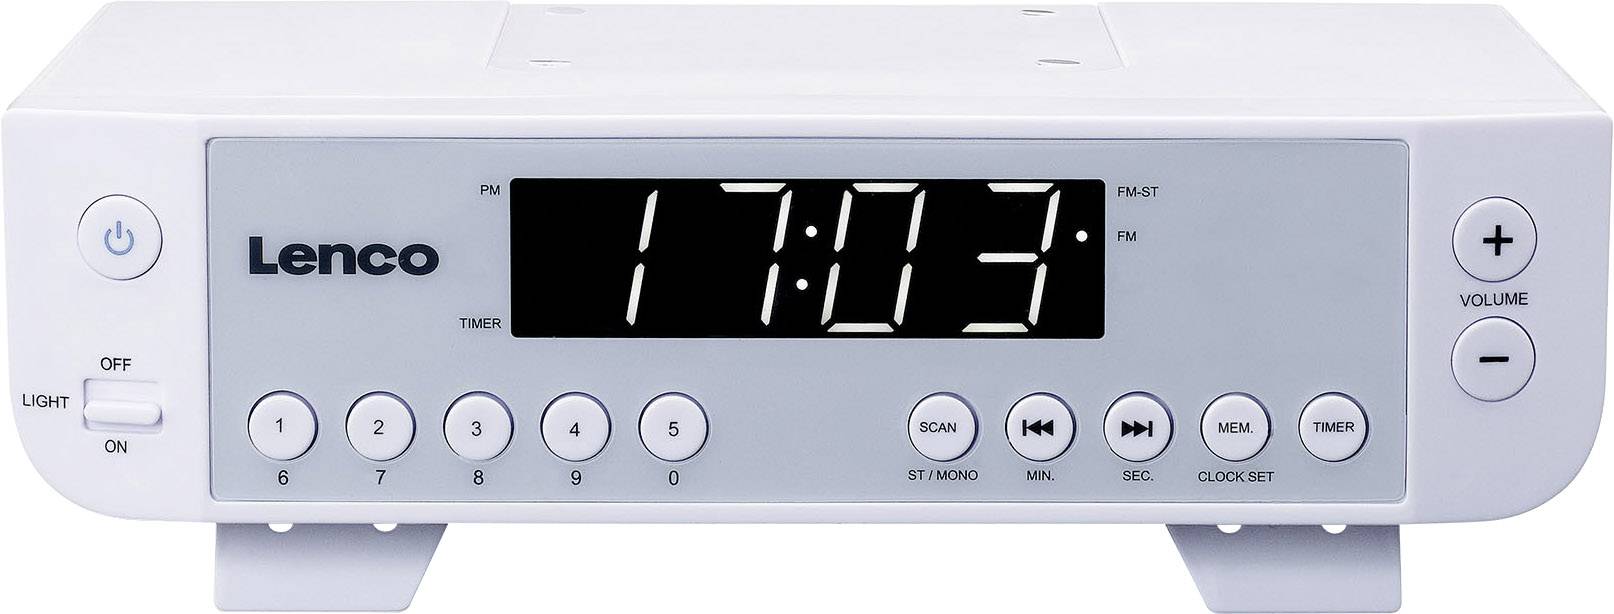 UKW Lenco Küchenradio KCR-11 kaufen Weiß